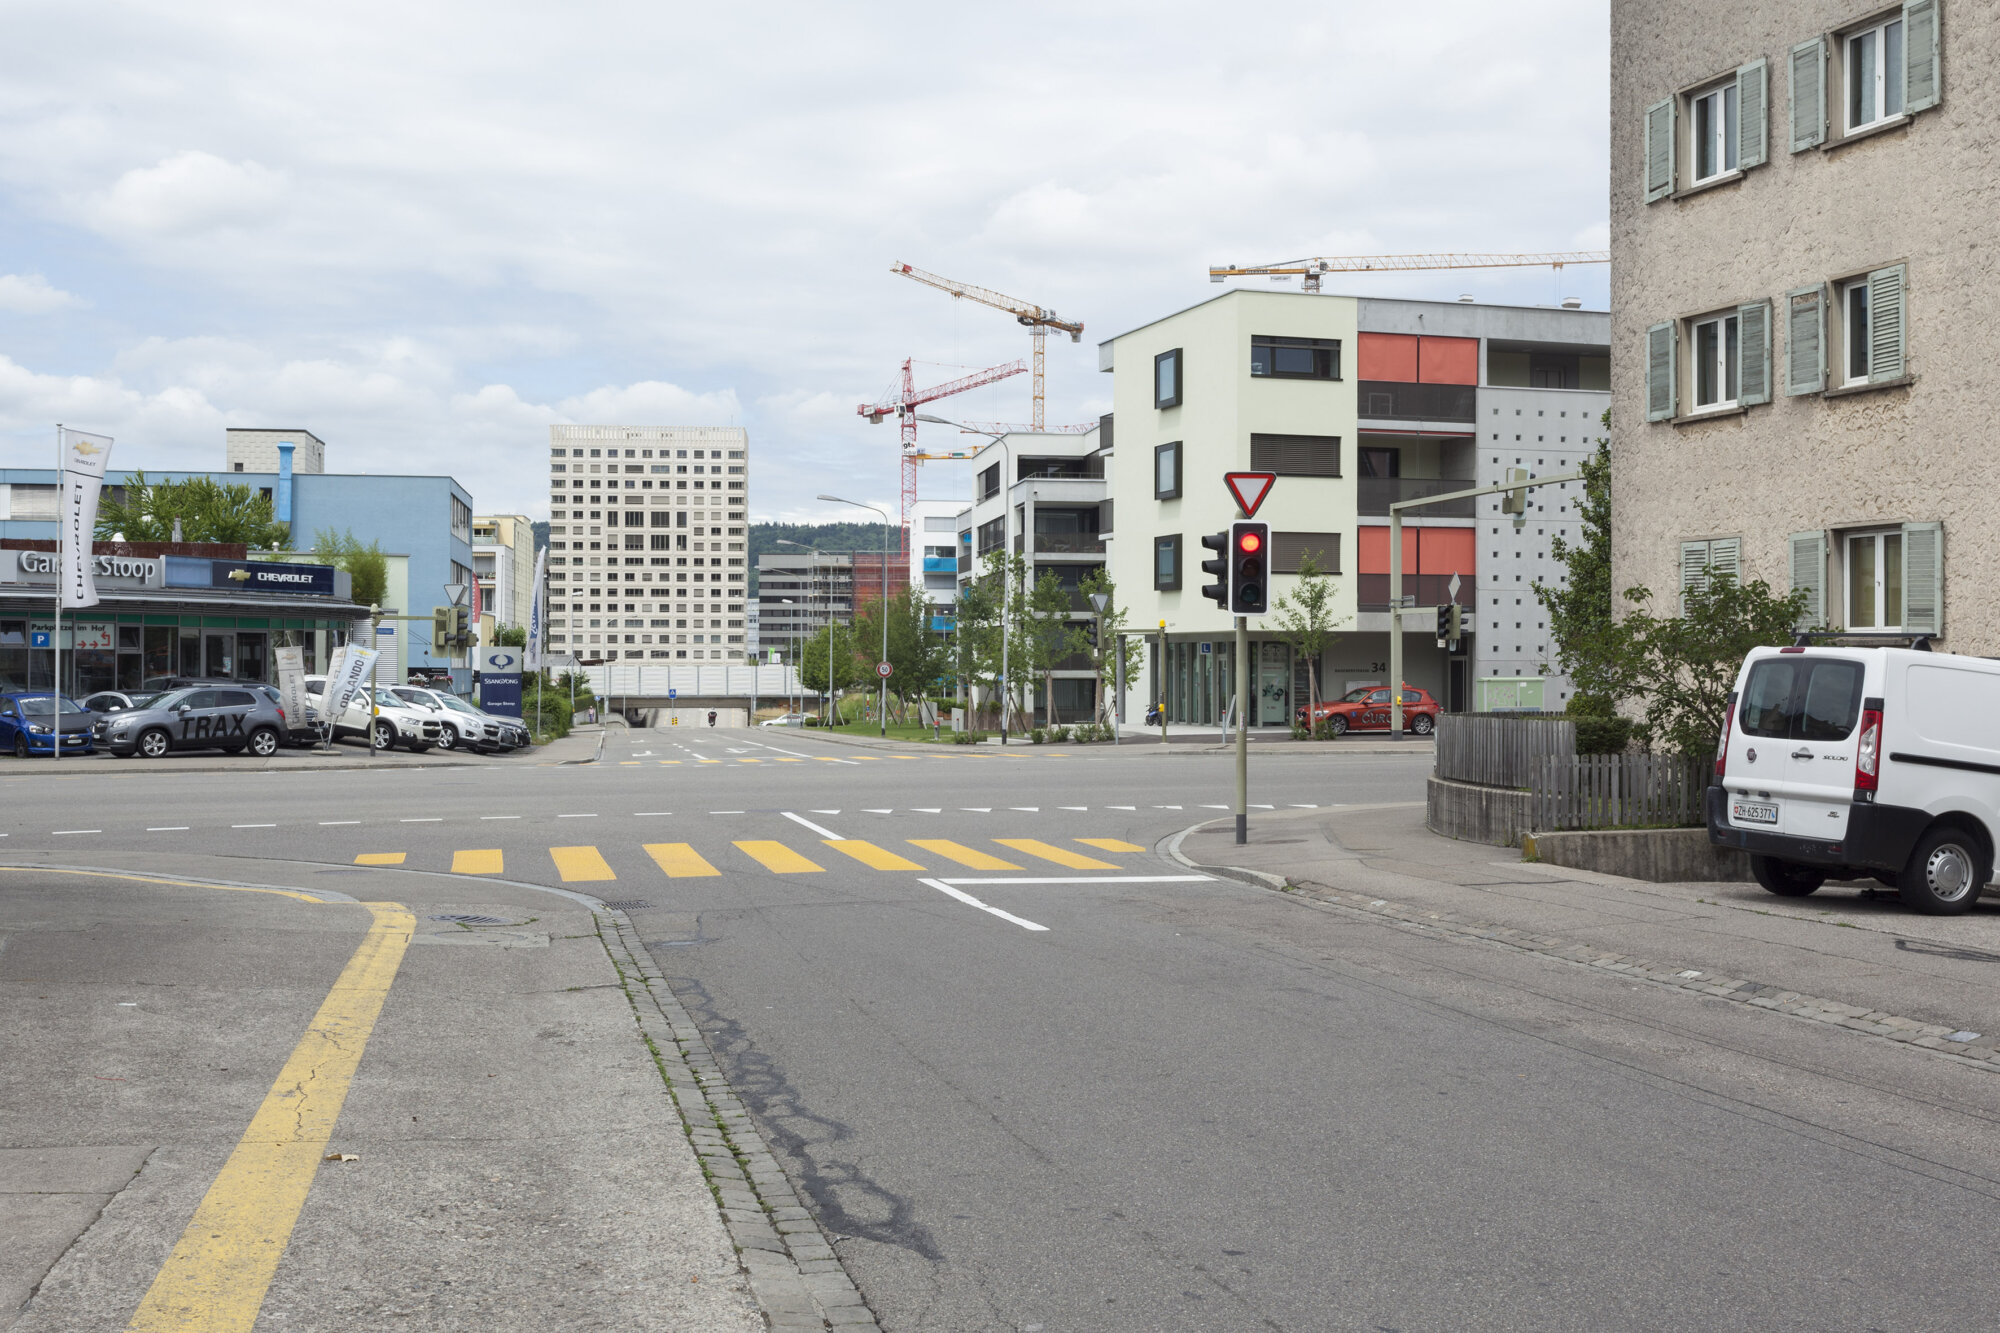 Kreuzung Nassackerstrasse Badenerstrasse, Blick nach Norden, 2013. Foto: © Meret Wandeler et al.